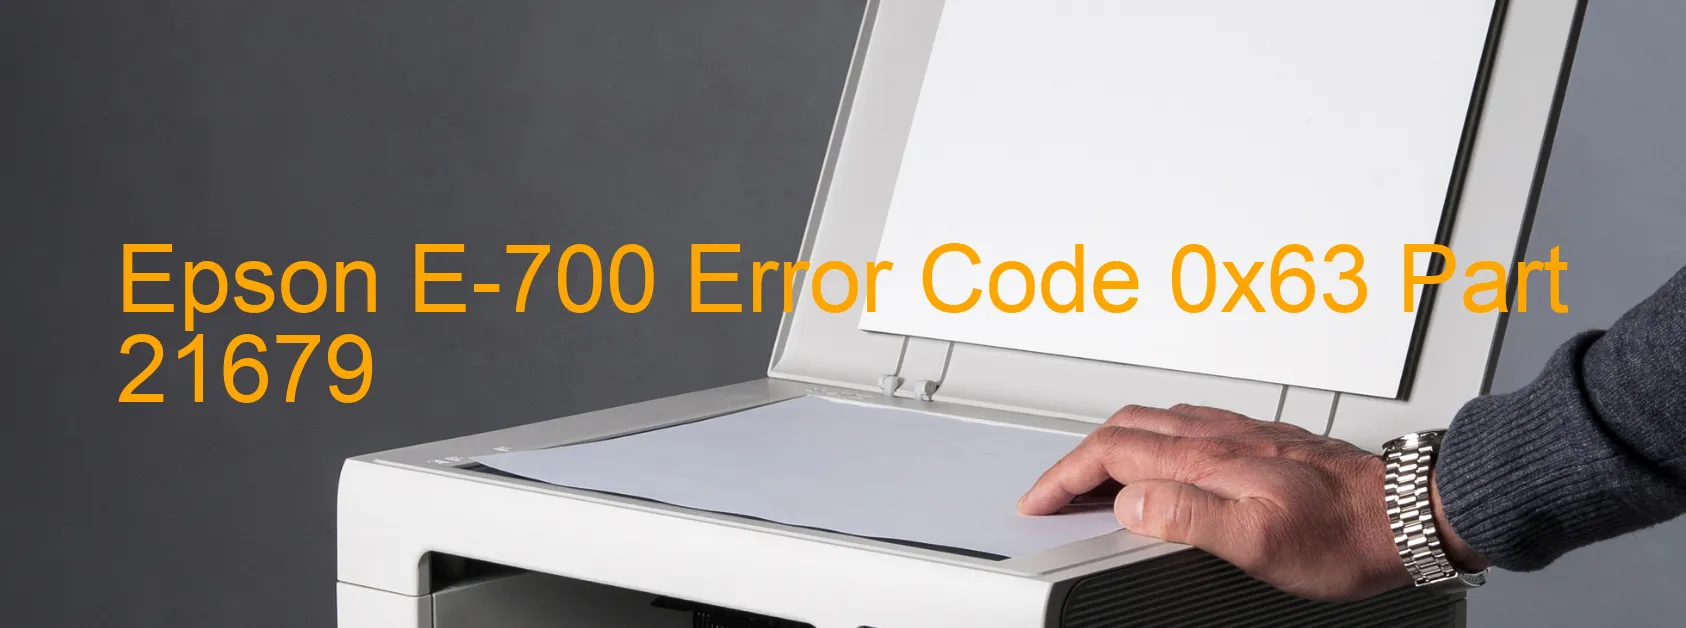 Epson E-700 Error Code 0x63 Part 21679